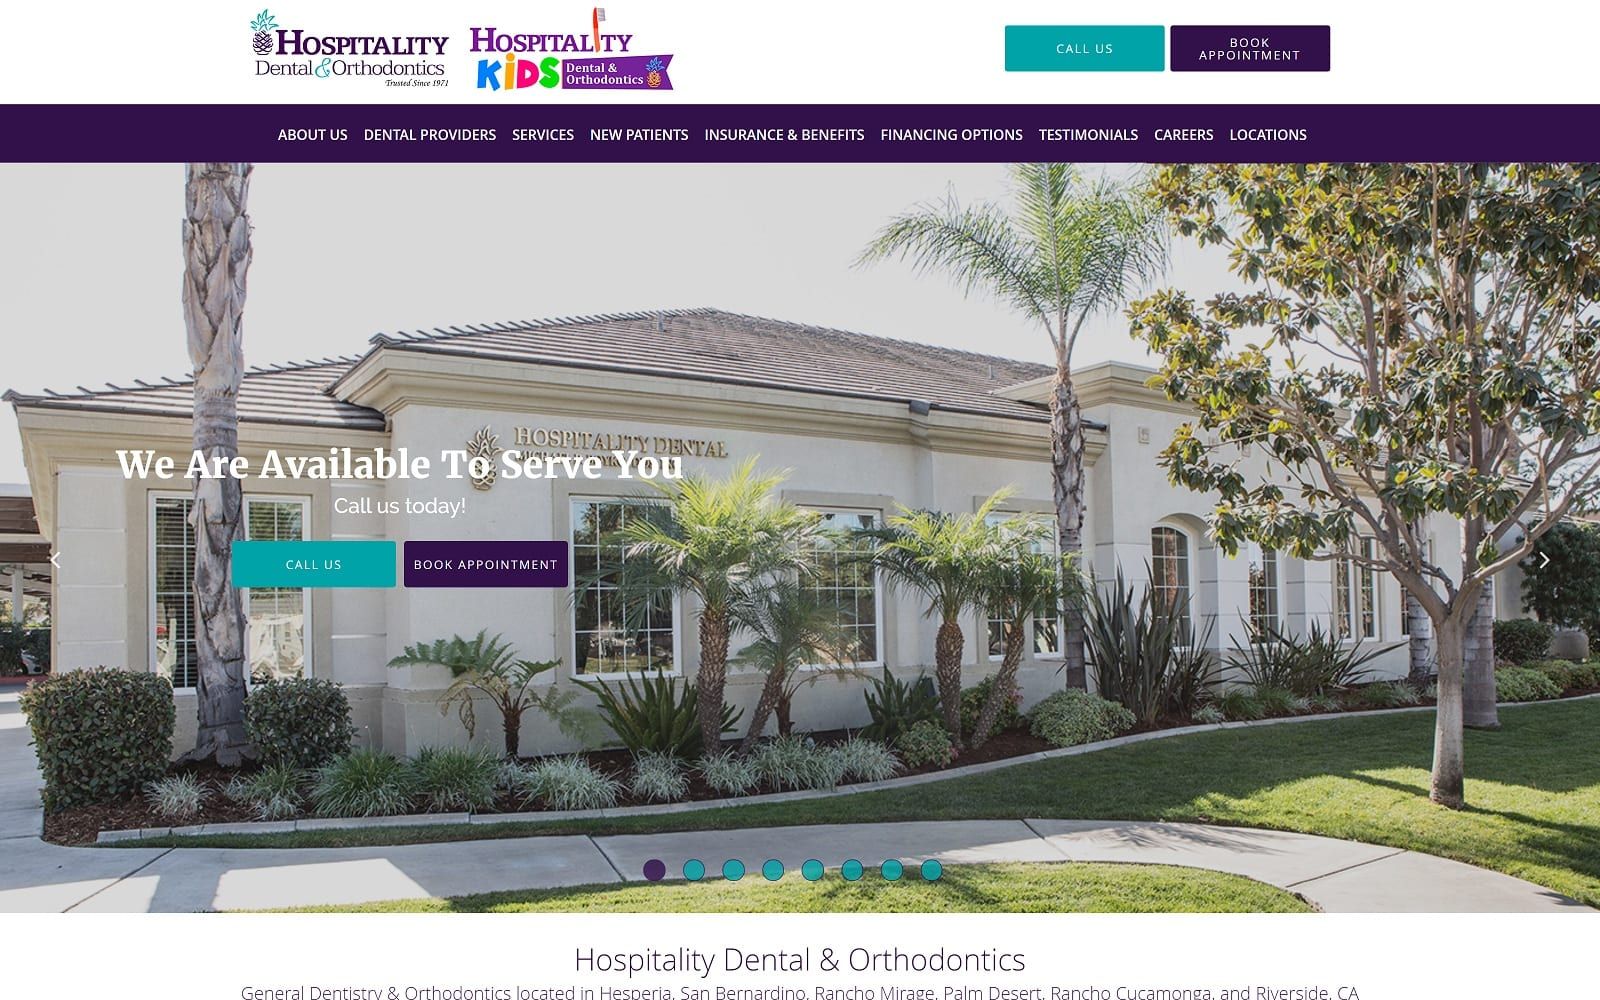 The Screenshot of Hospitality Dental & Orthodontics hospitalitydental.com Website